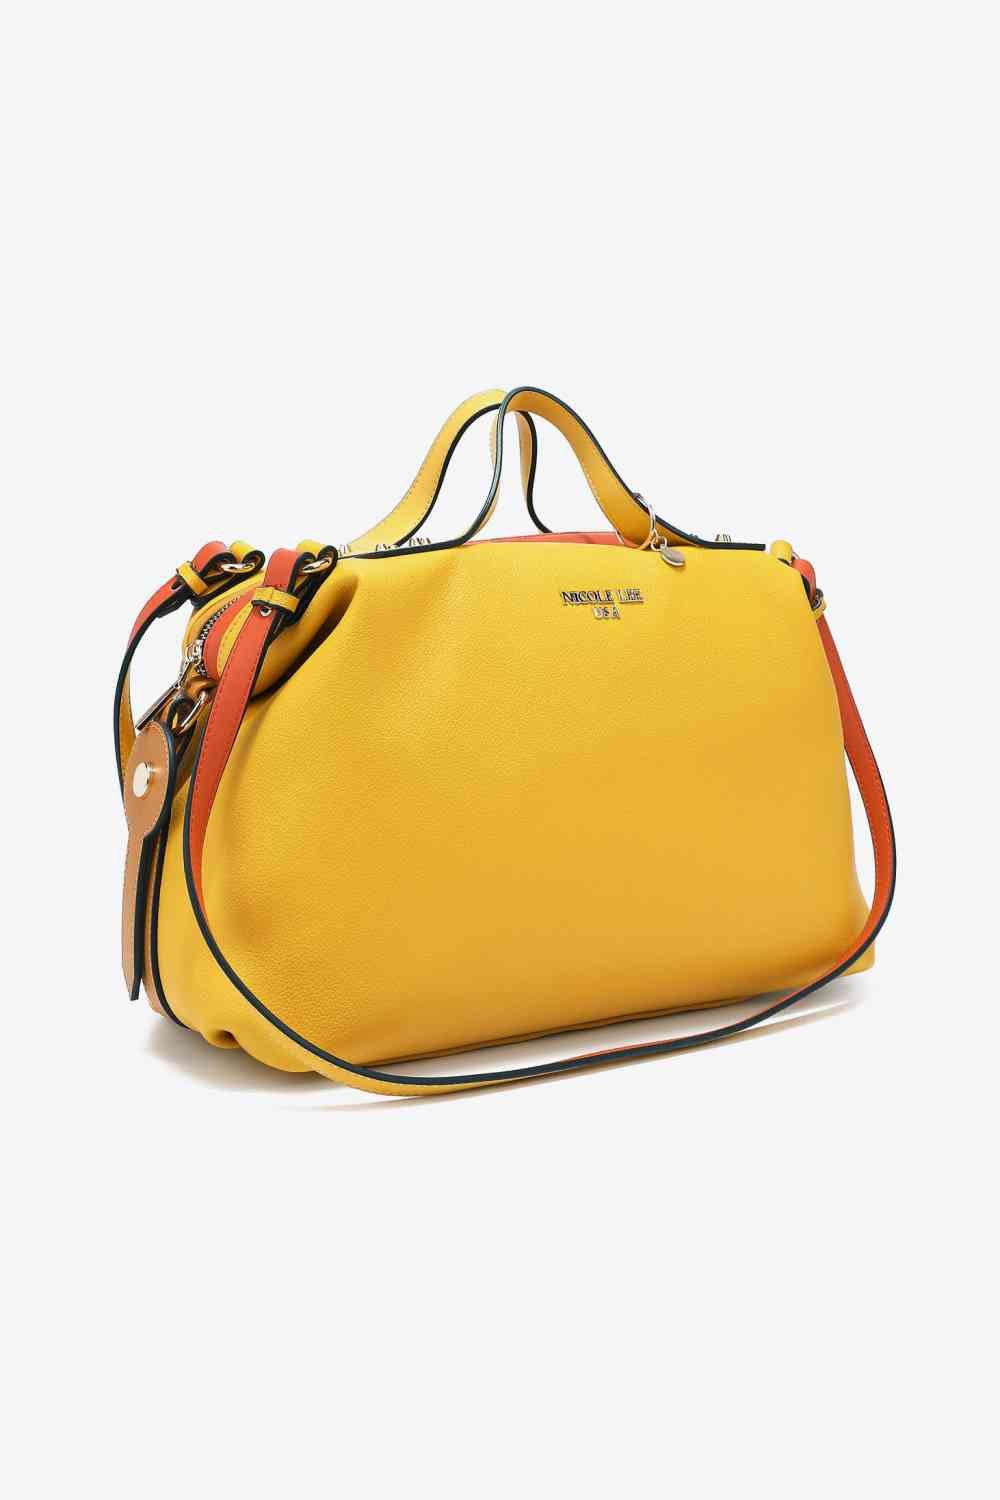 Nicole Lee USA Avery Multi Strap Boston Bag - GemThreads Boutique